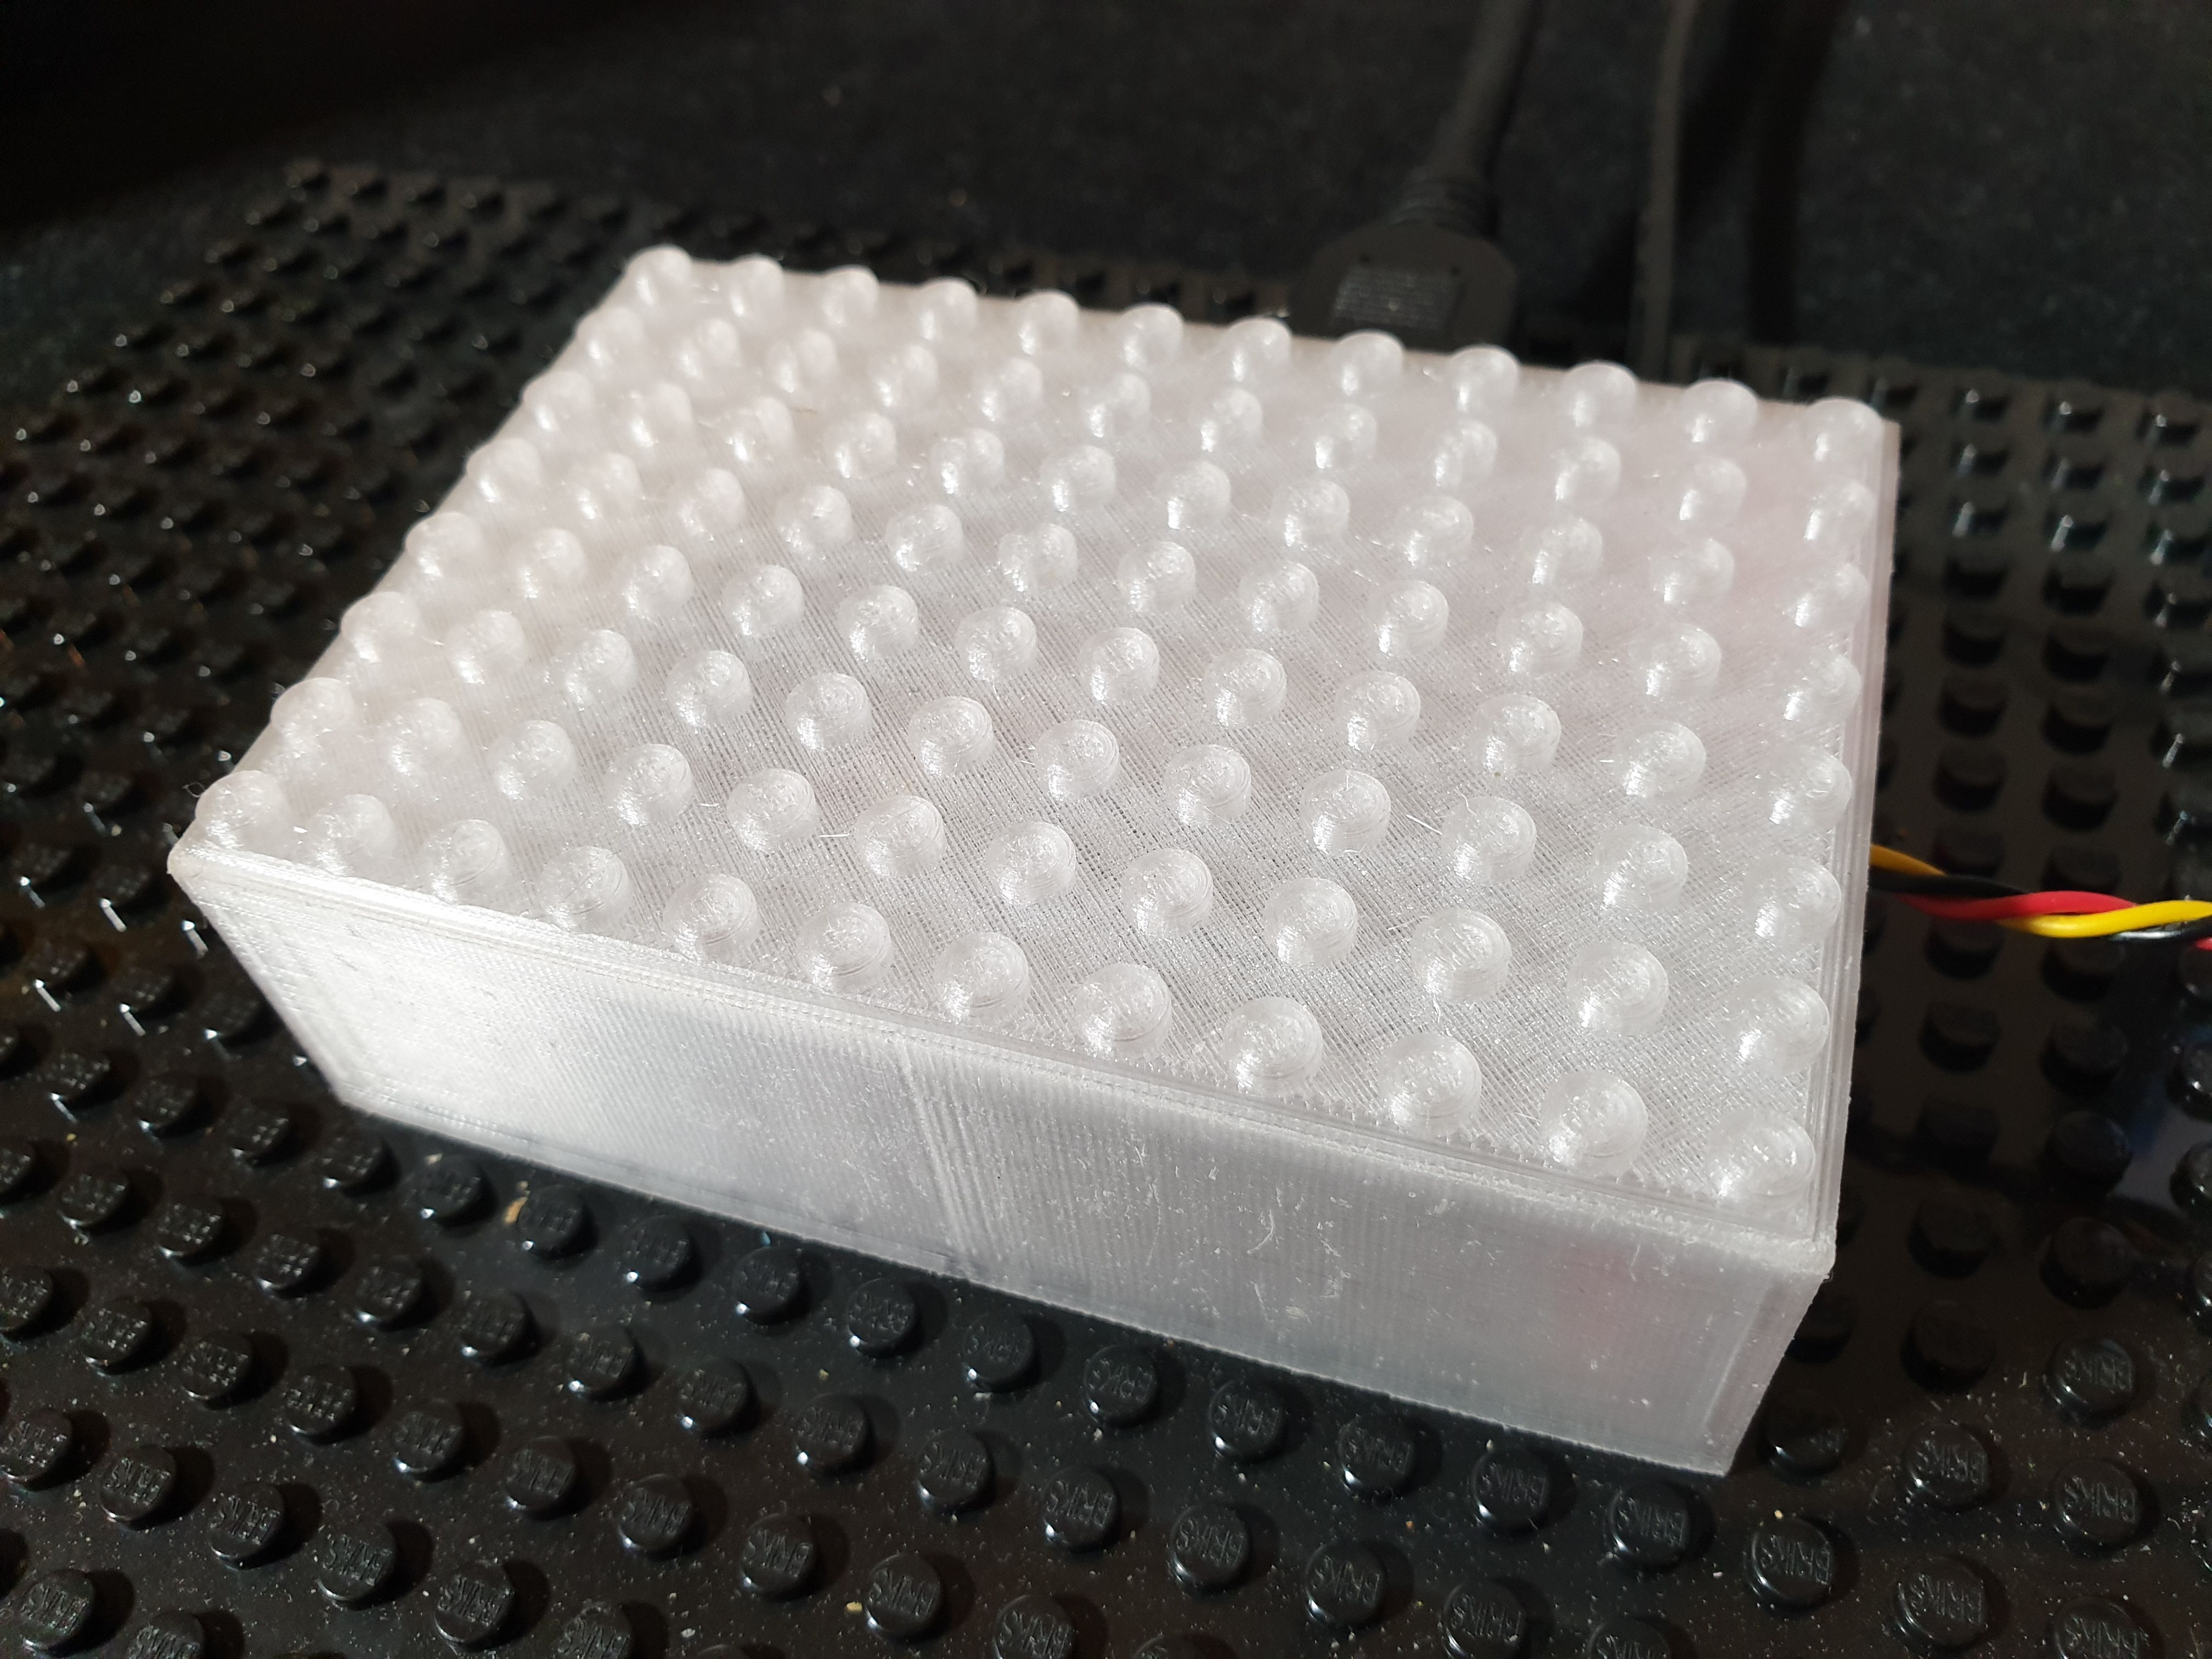 Raspberry-Pi 3 Case LEGO compatible